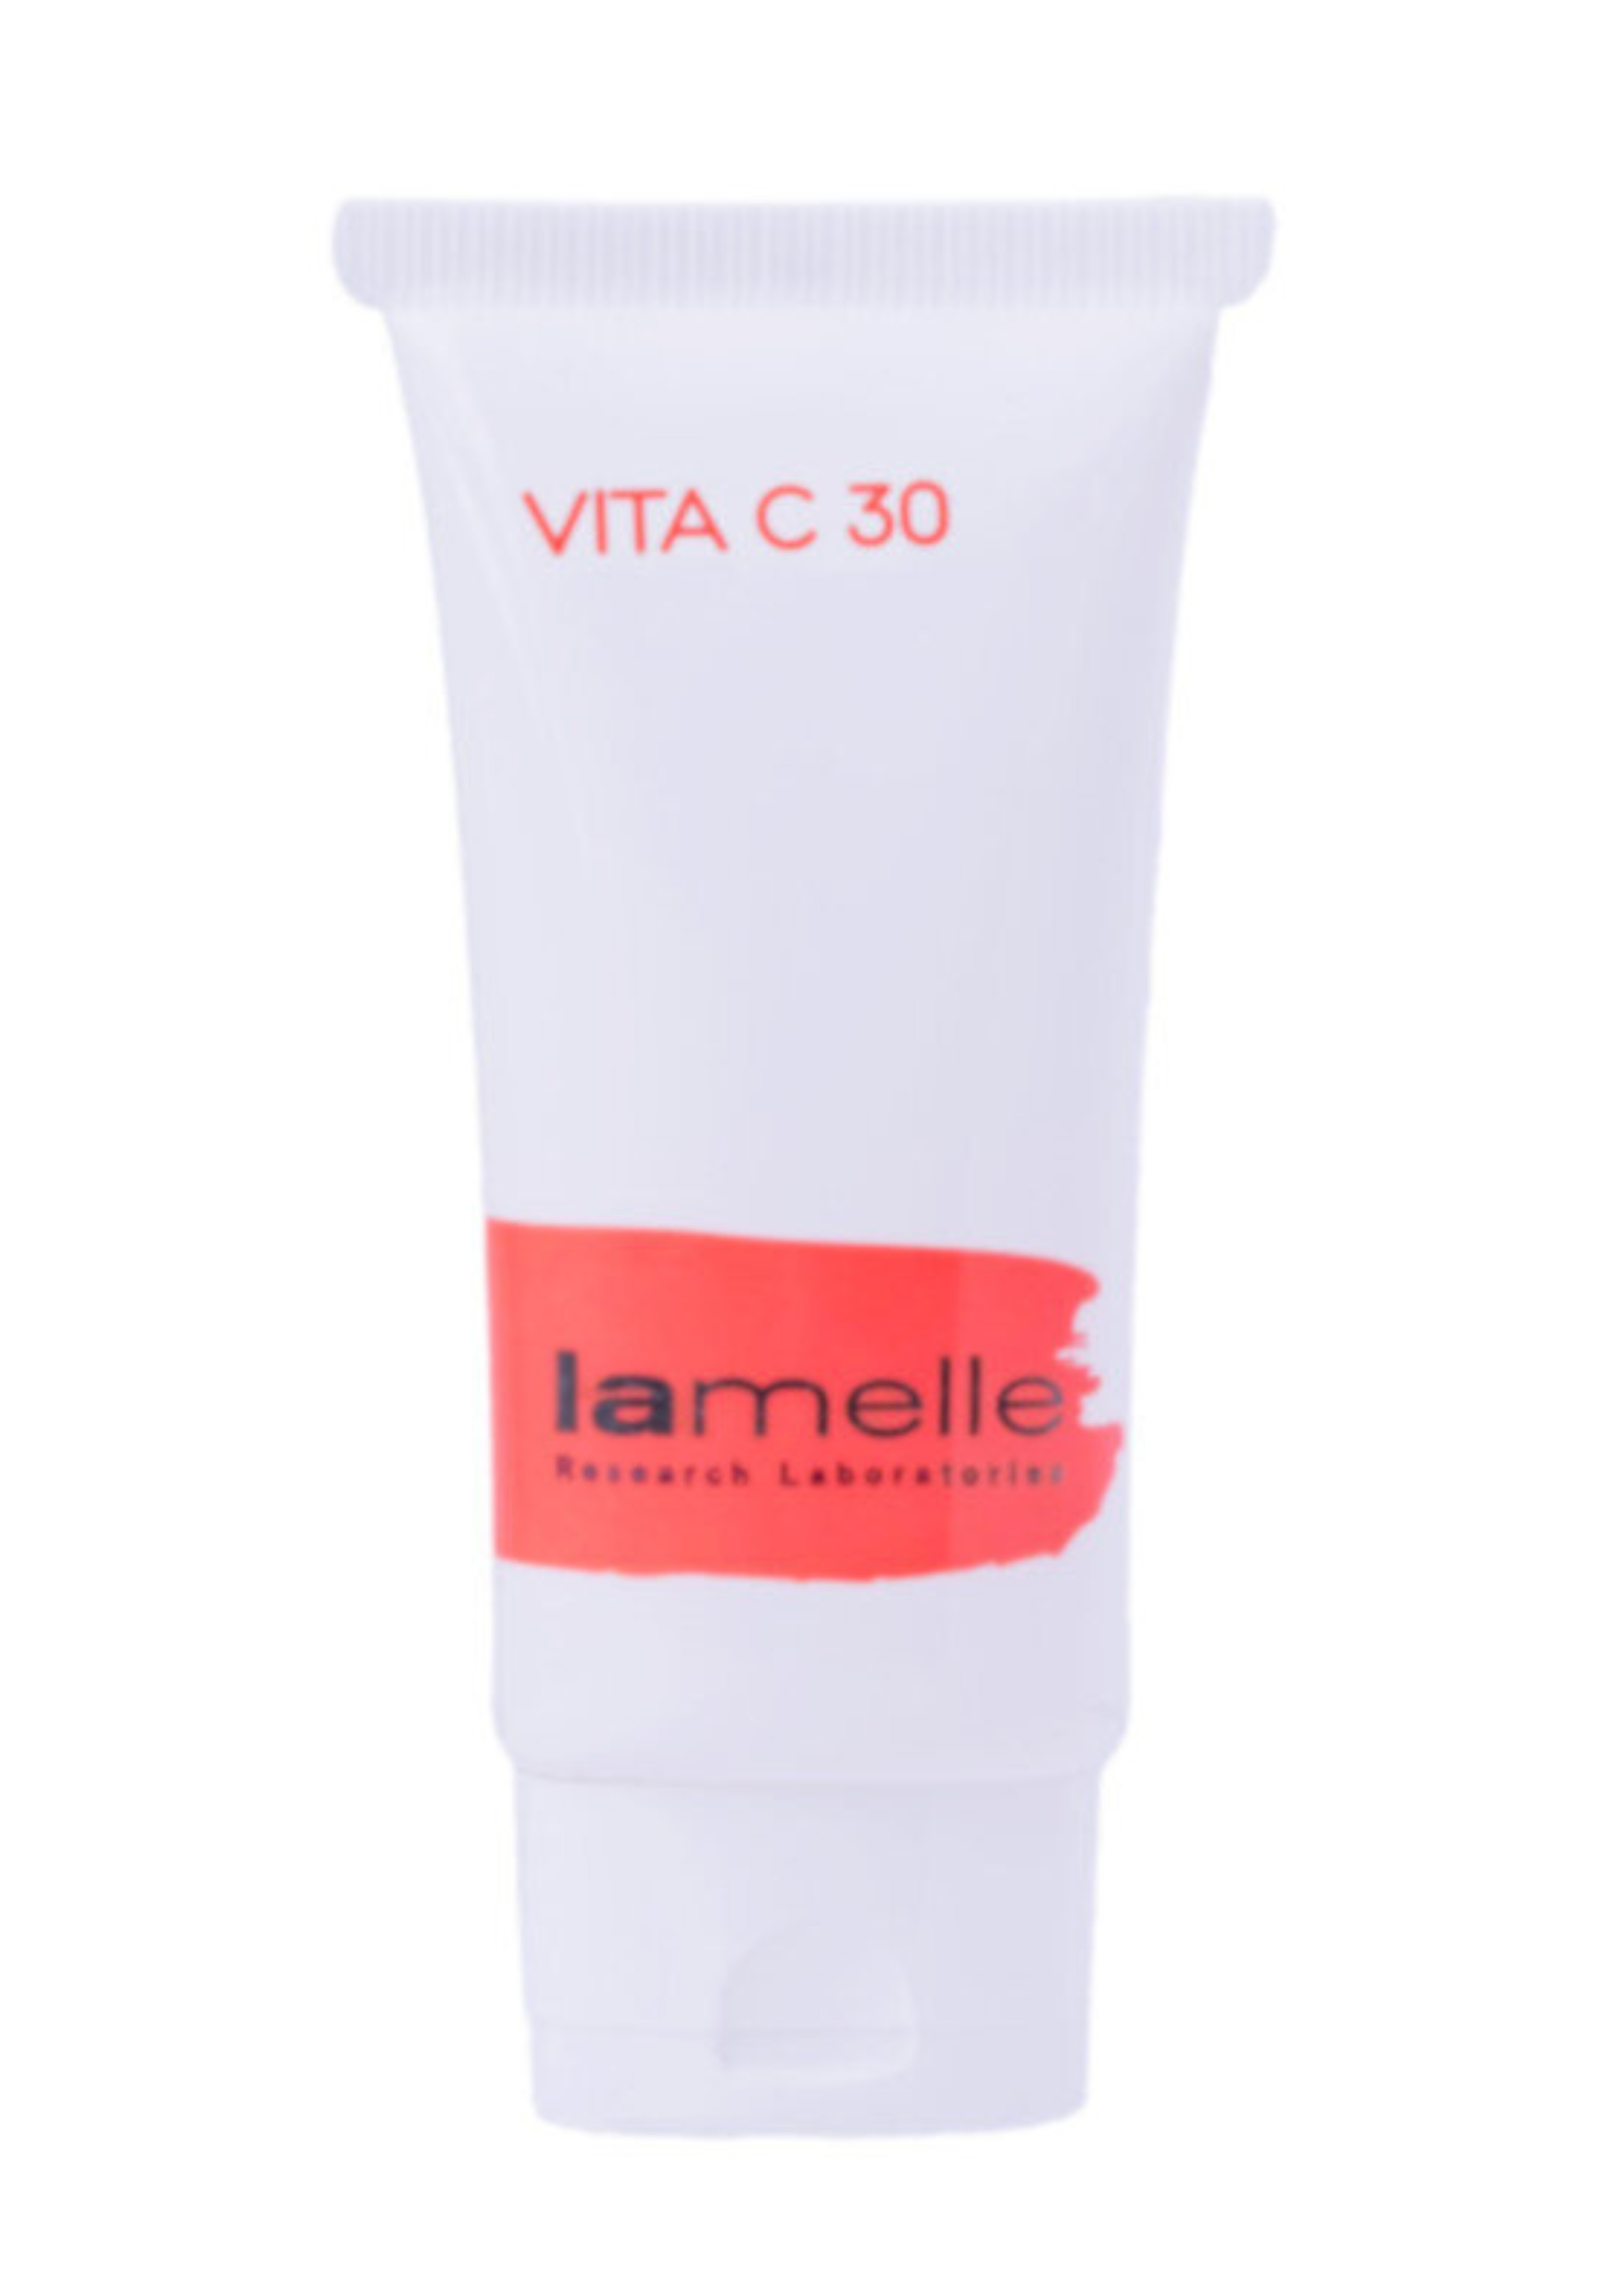 Lamelle® Correctives Vita C 30